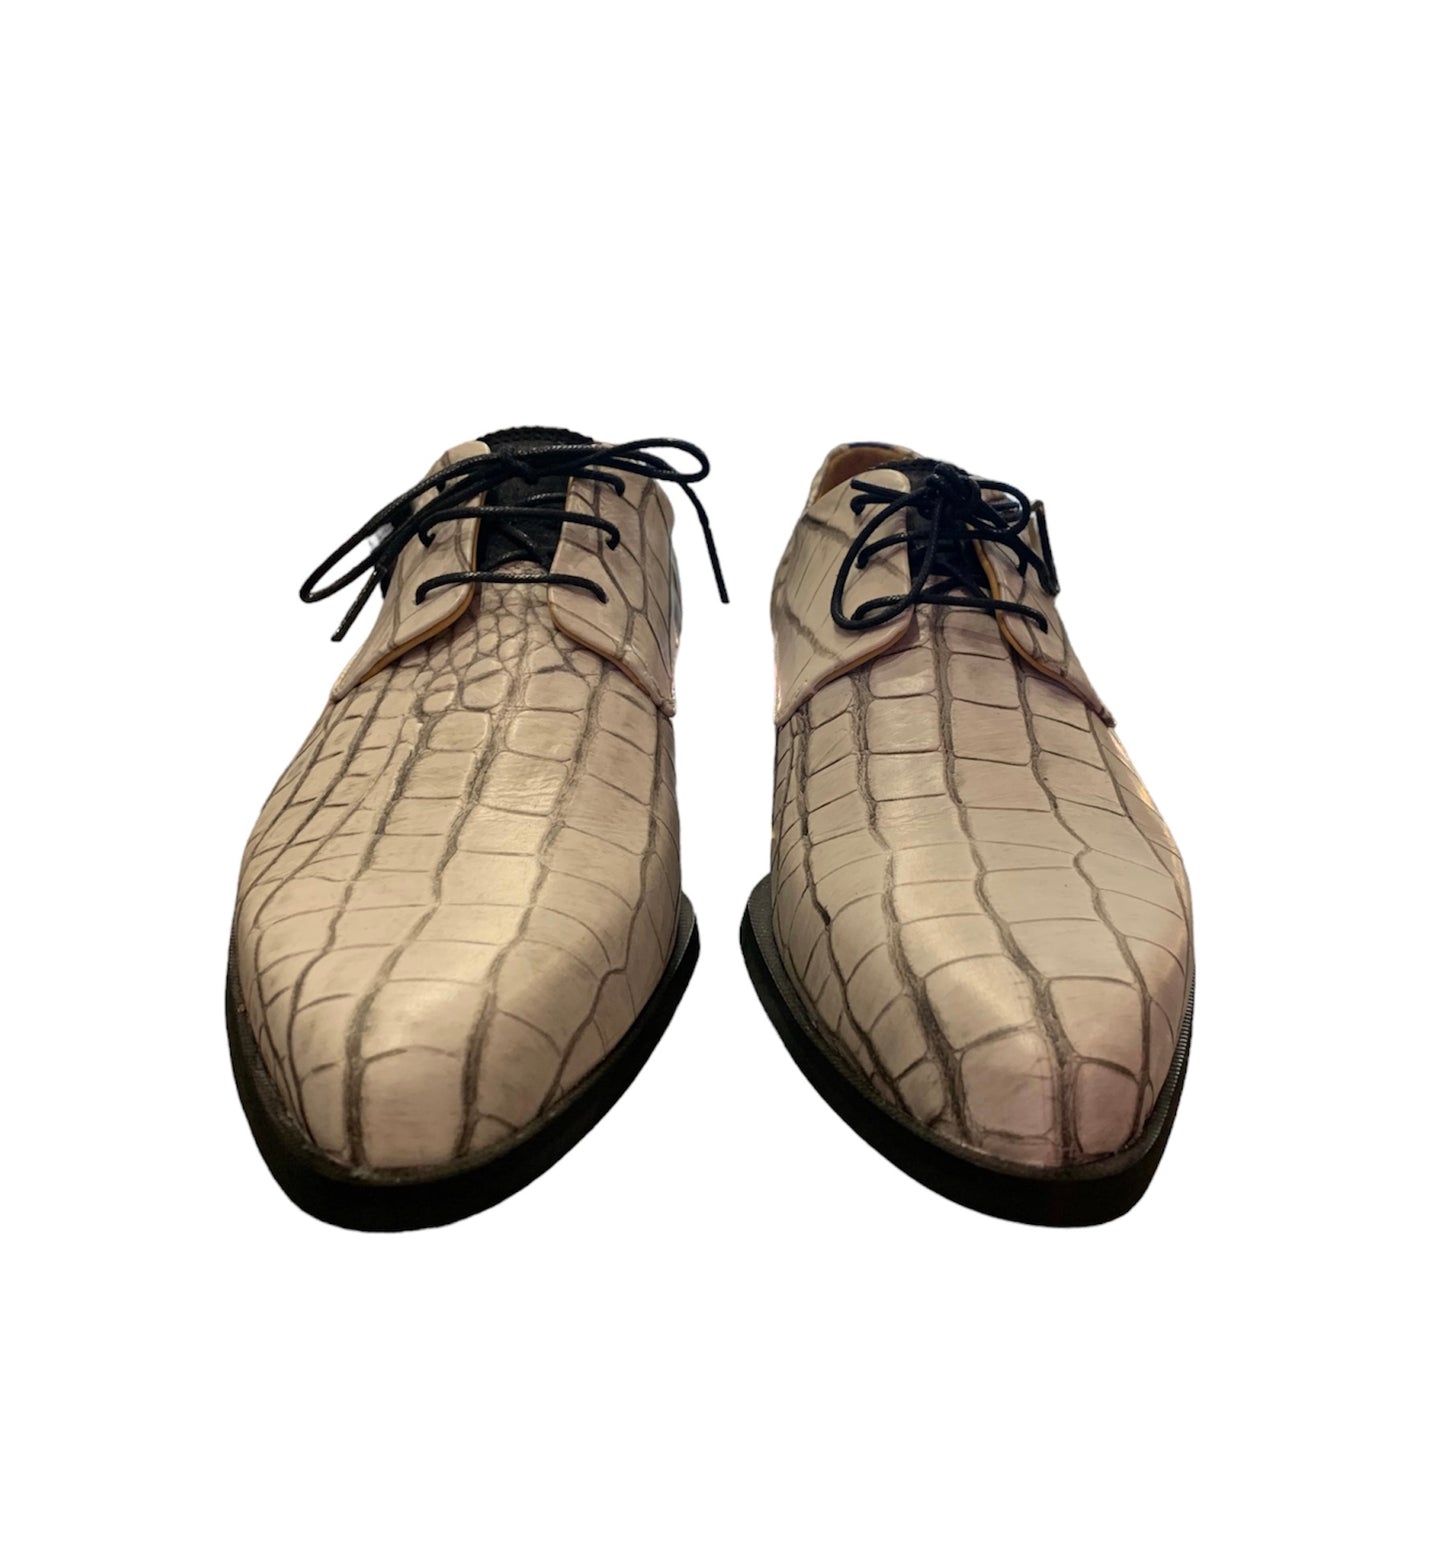 Modern Snakeskin Print Leather Loafers by John Fluevog